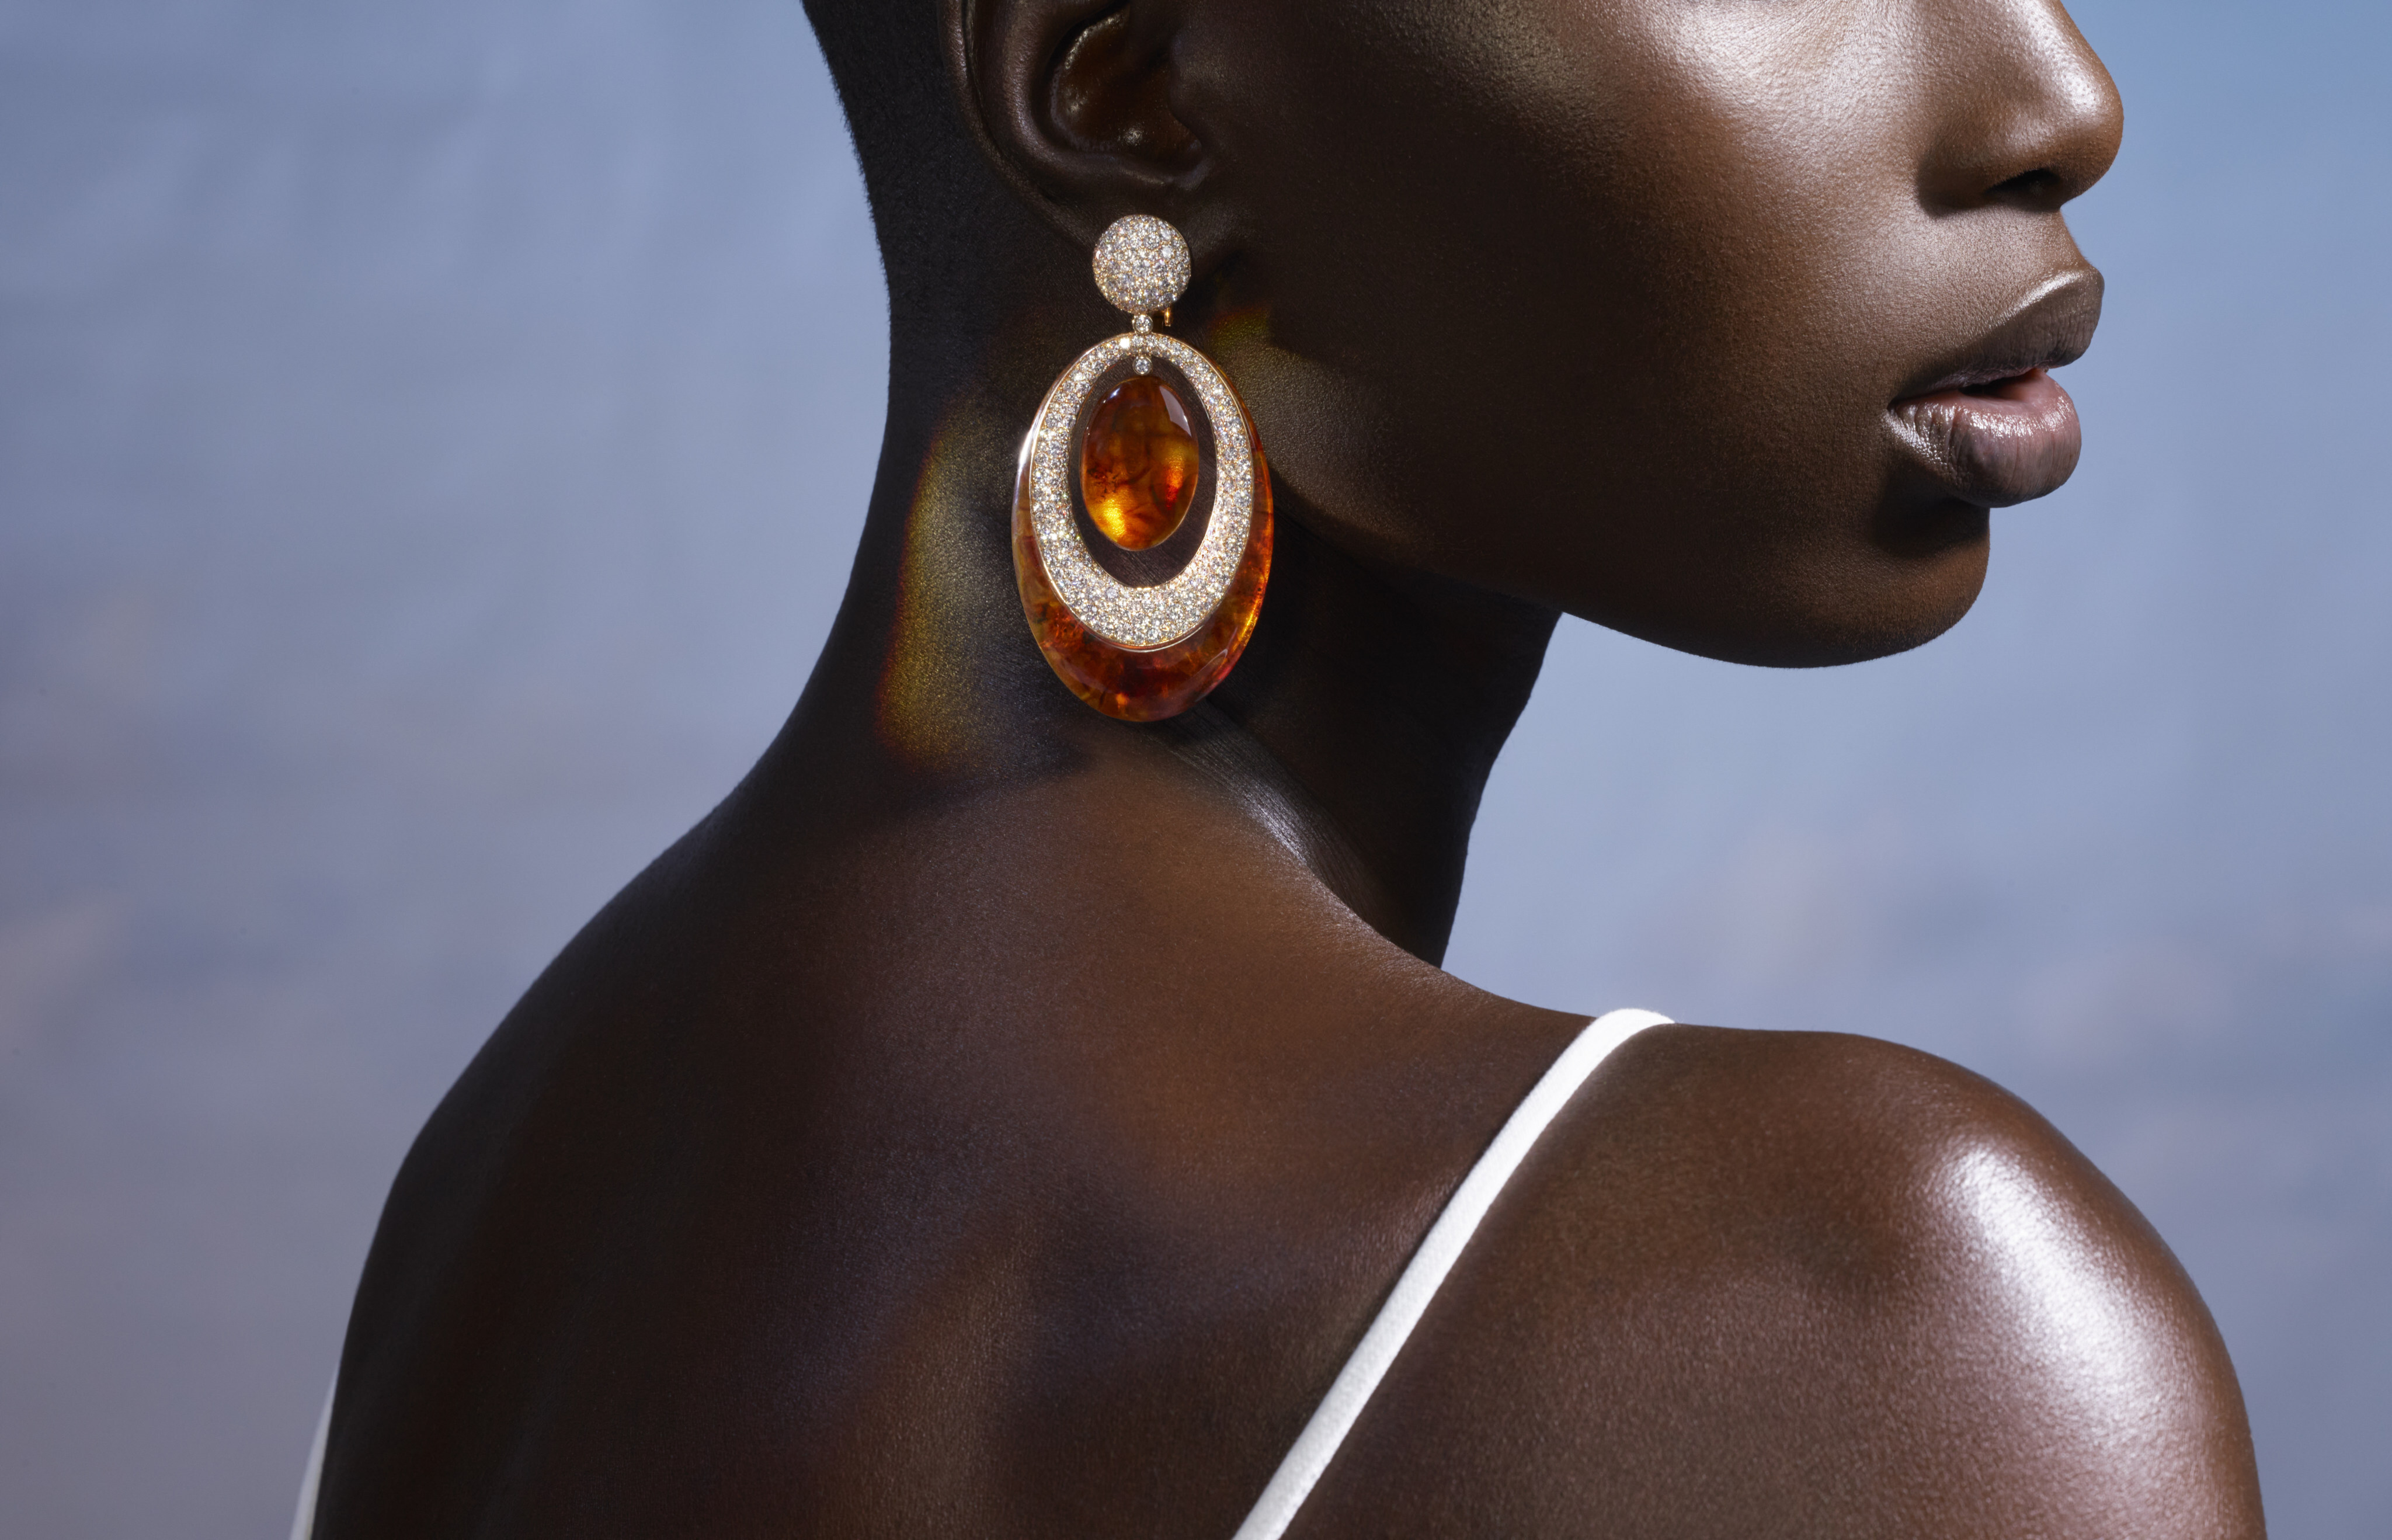 Rose gold, diamond and amber earrings from Fawaz Gruosi’s Amber collection. Photo: Fawaz Gruosi